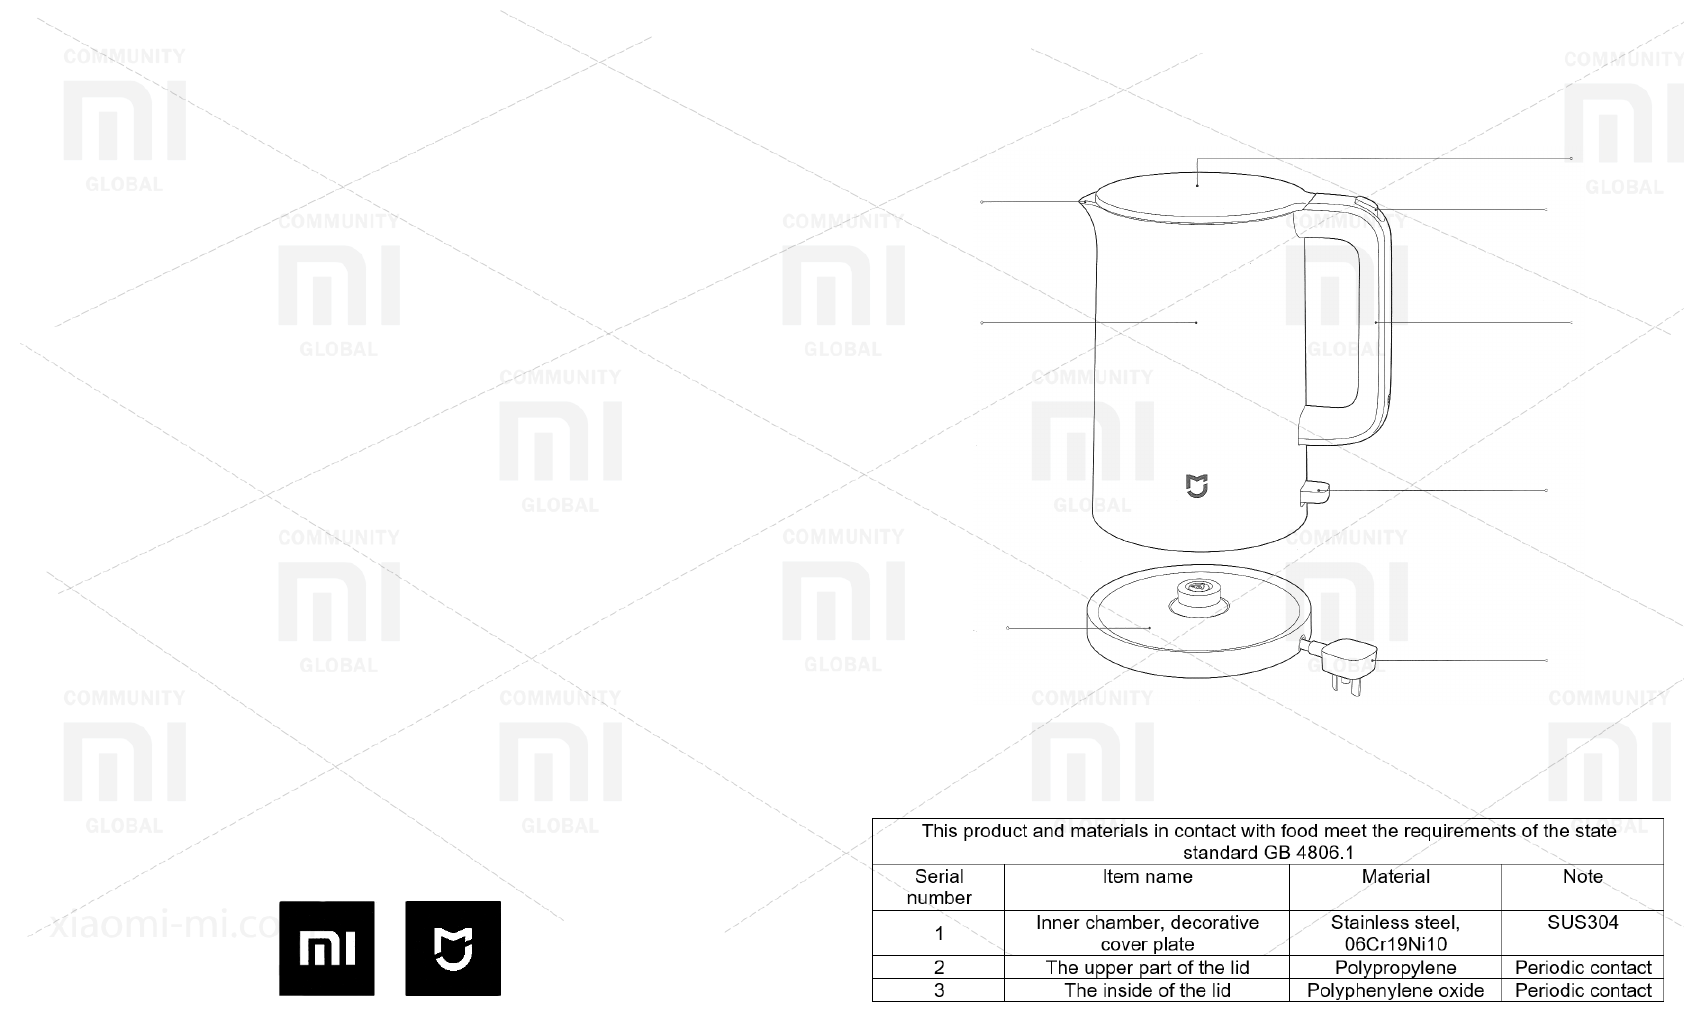 mijia smart temperature control kettle